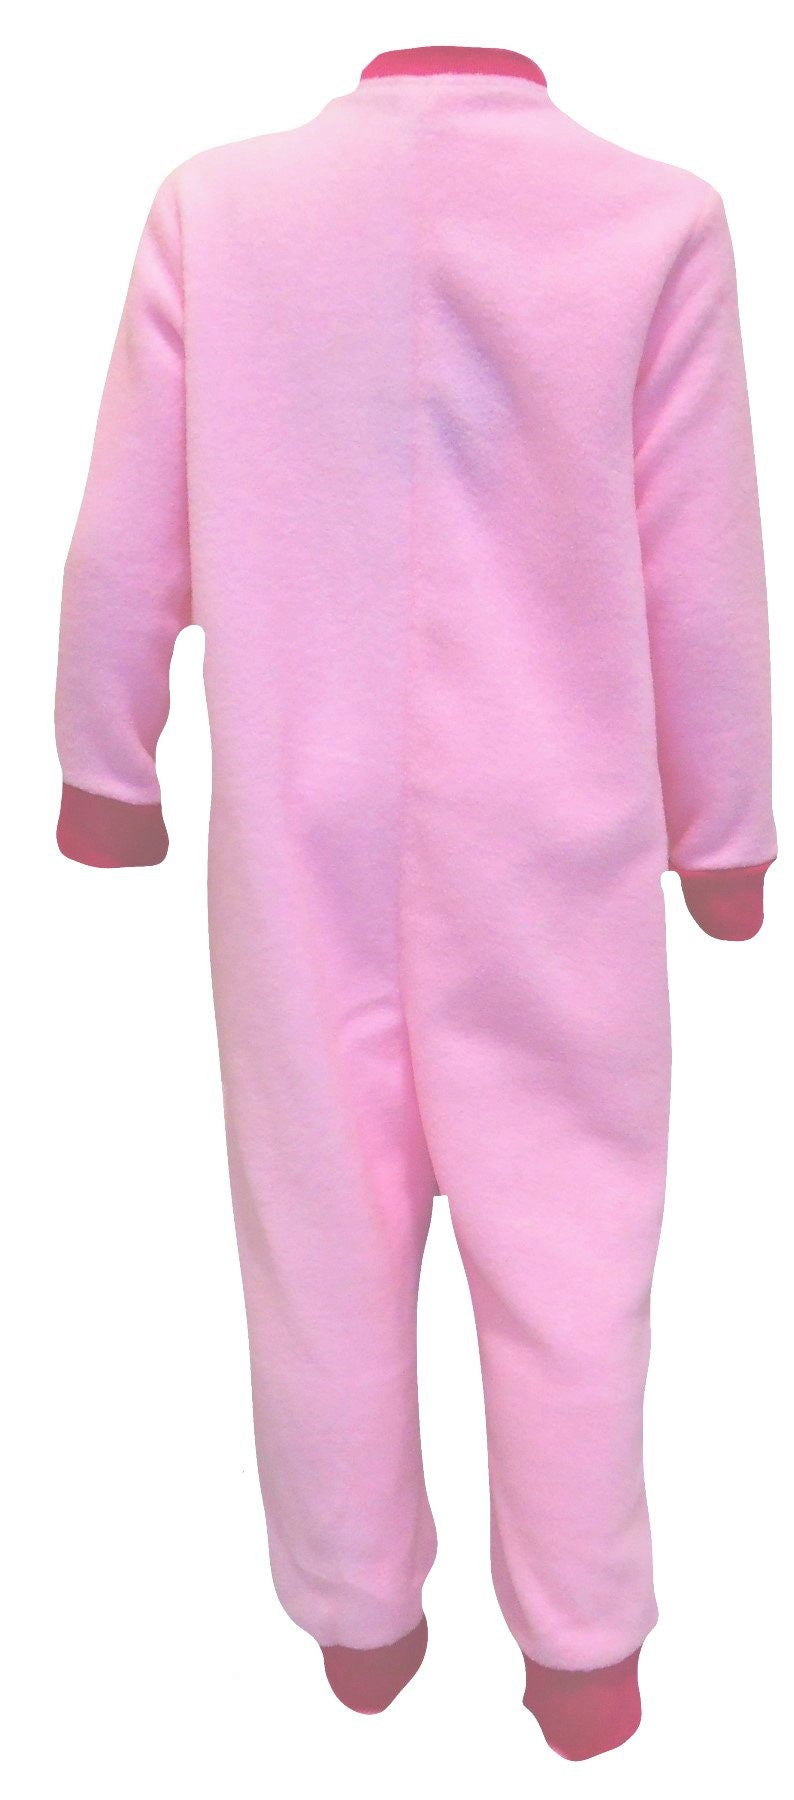 Paw Patrol Skye Pink Fleece Feel One Piece Sleepsuit Pyjamas 18-24 Months